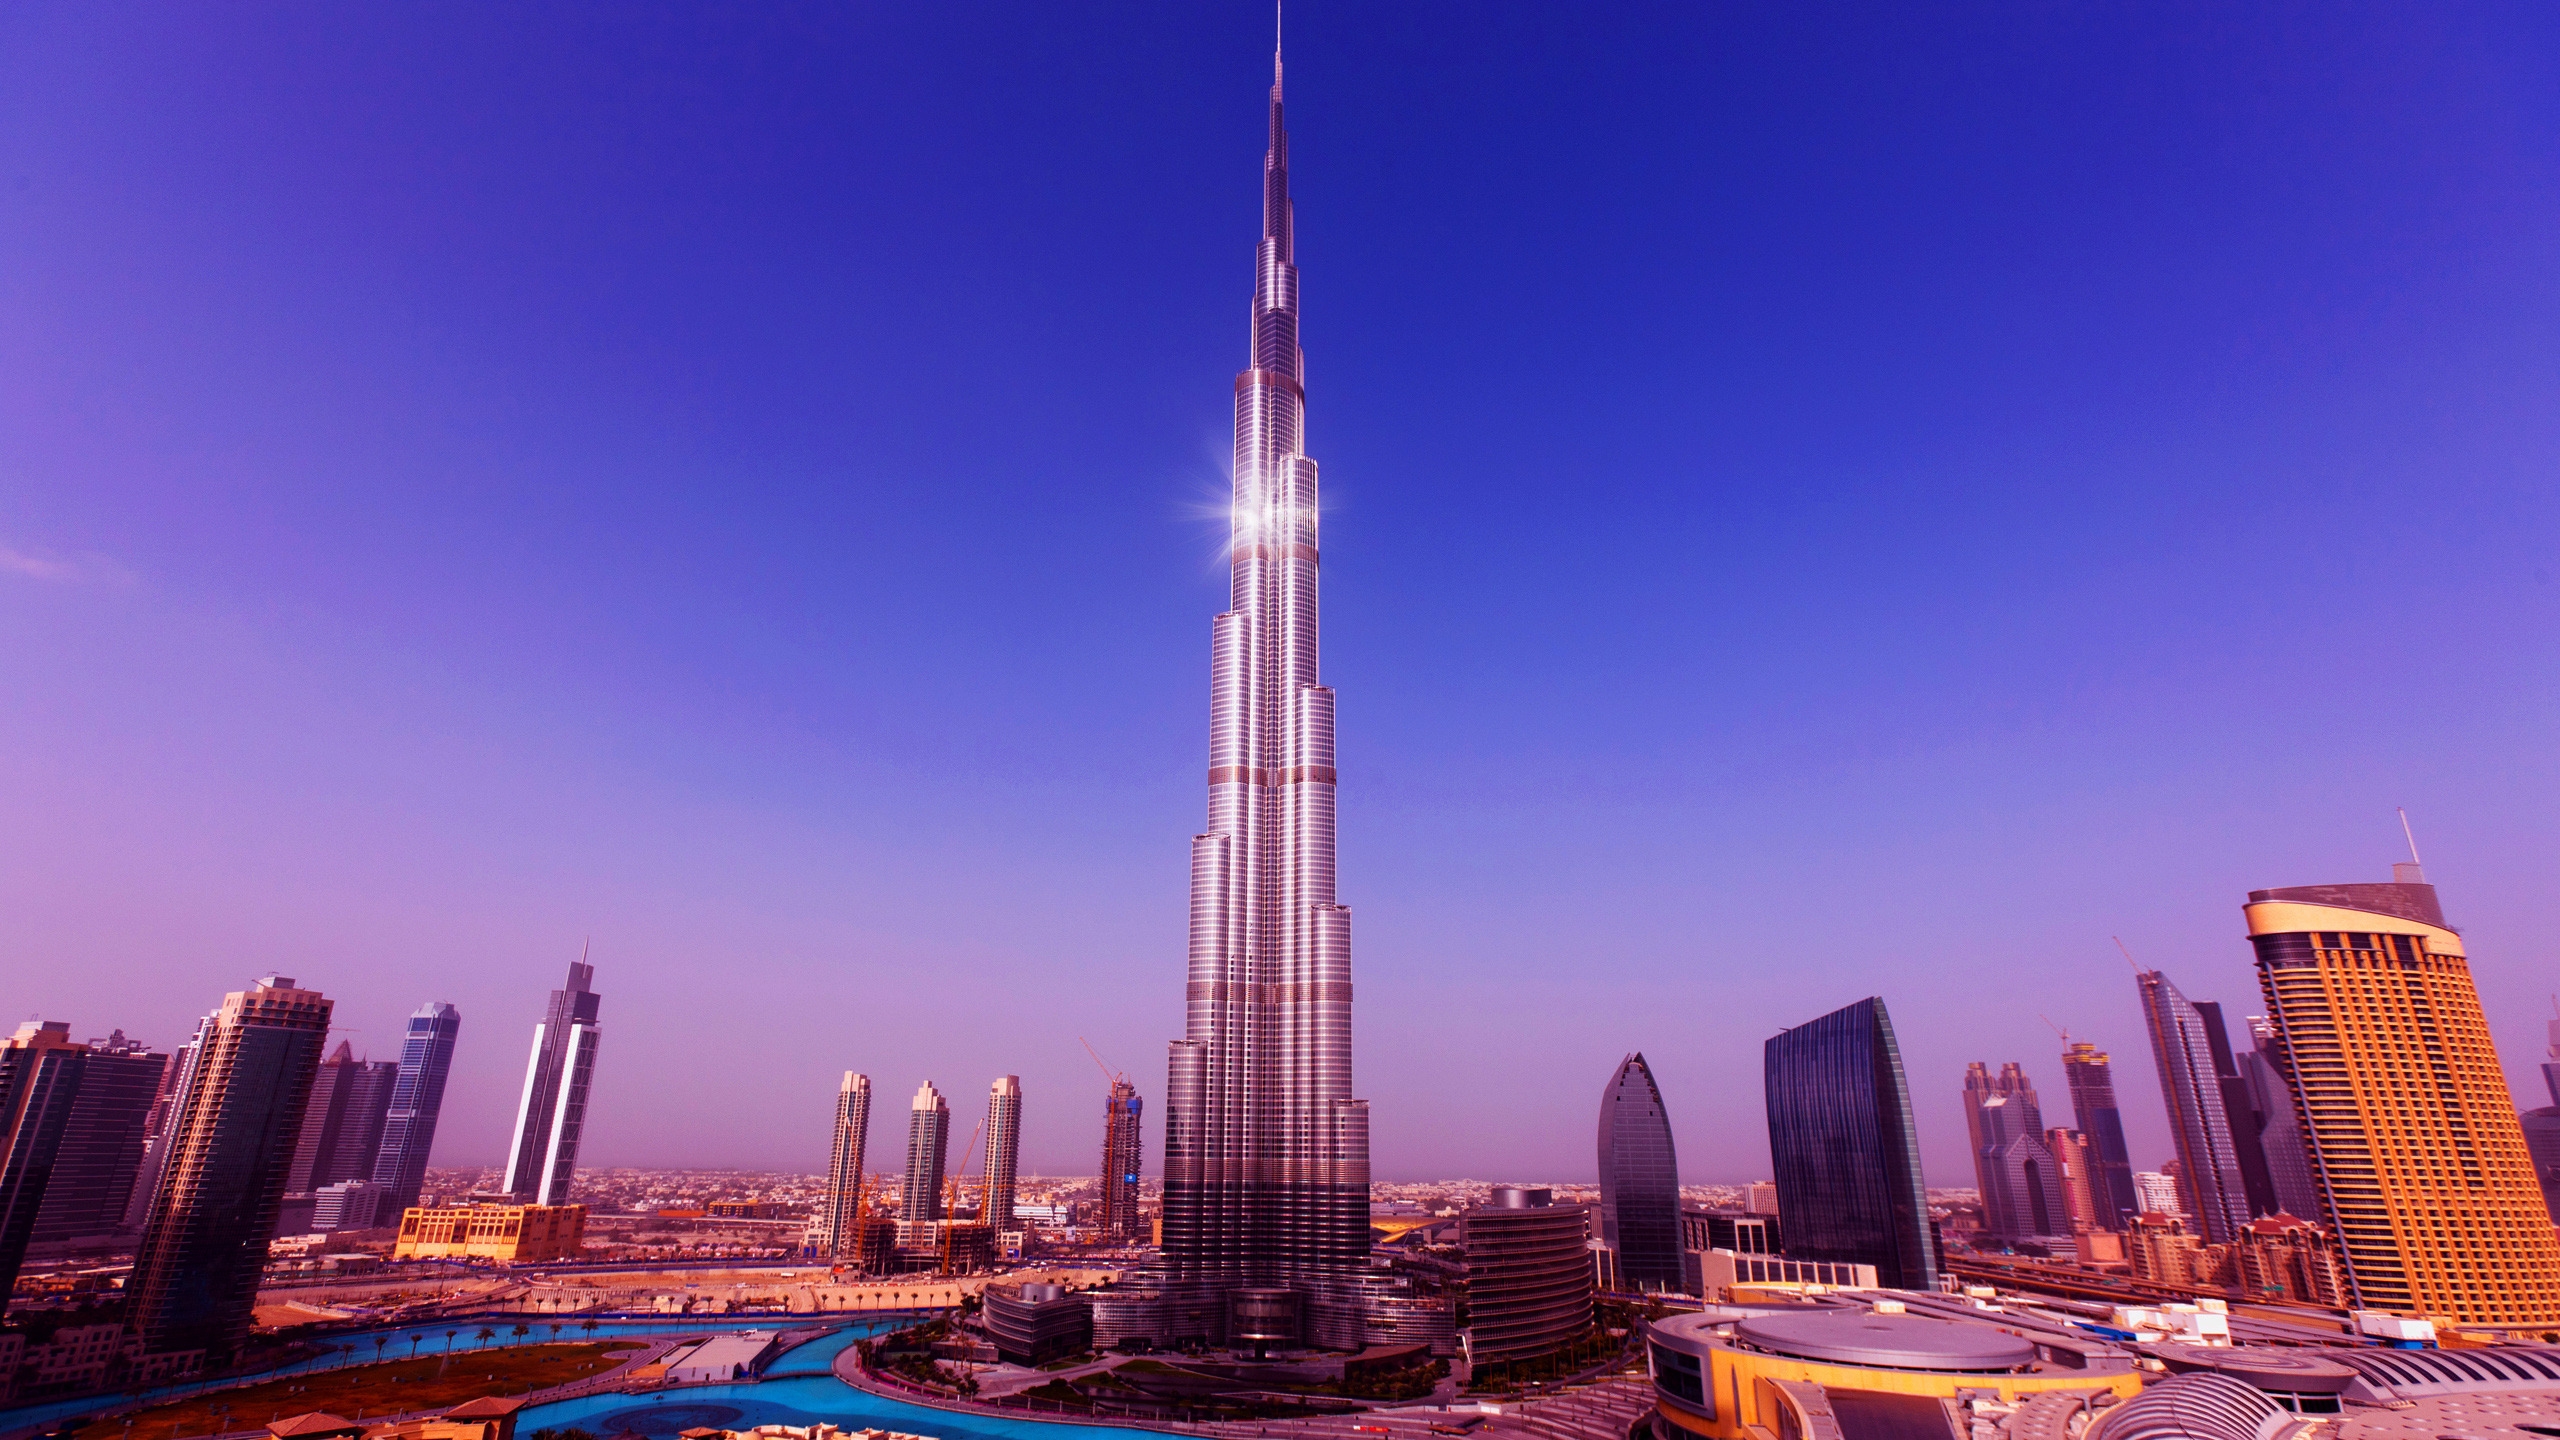 Burj Khalifa Tower Dubai for 2560x1440 HDTV resolution